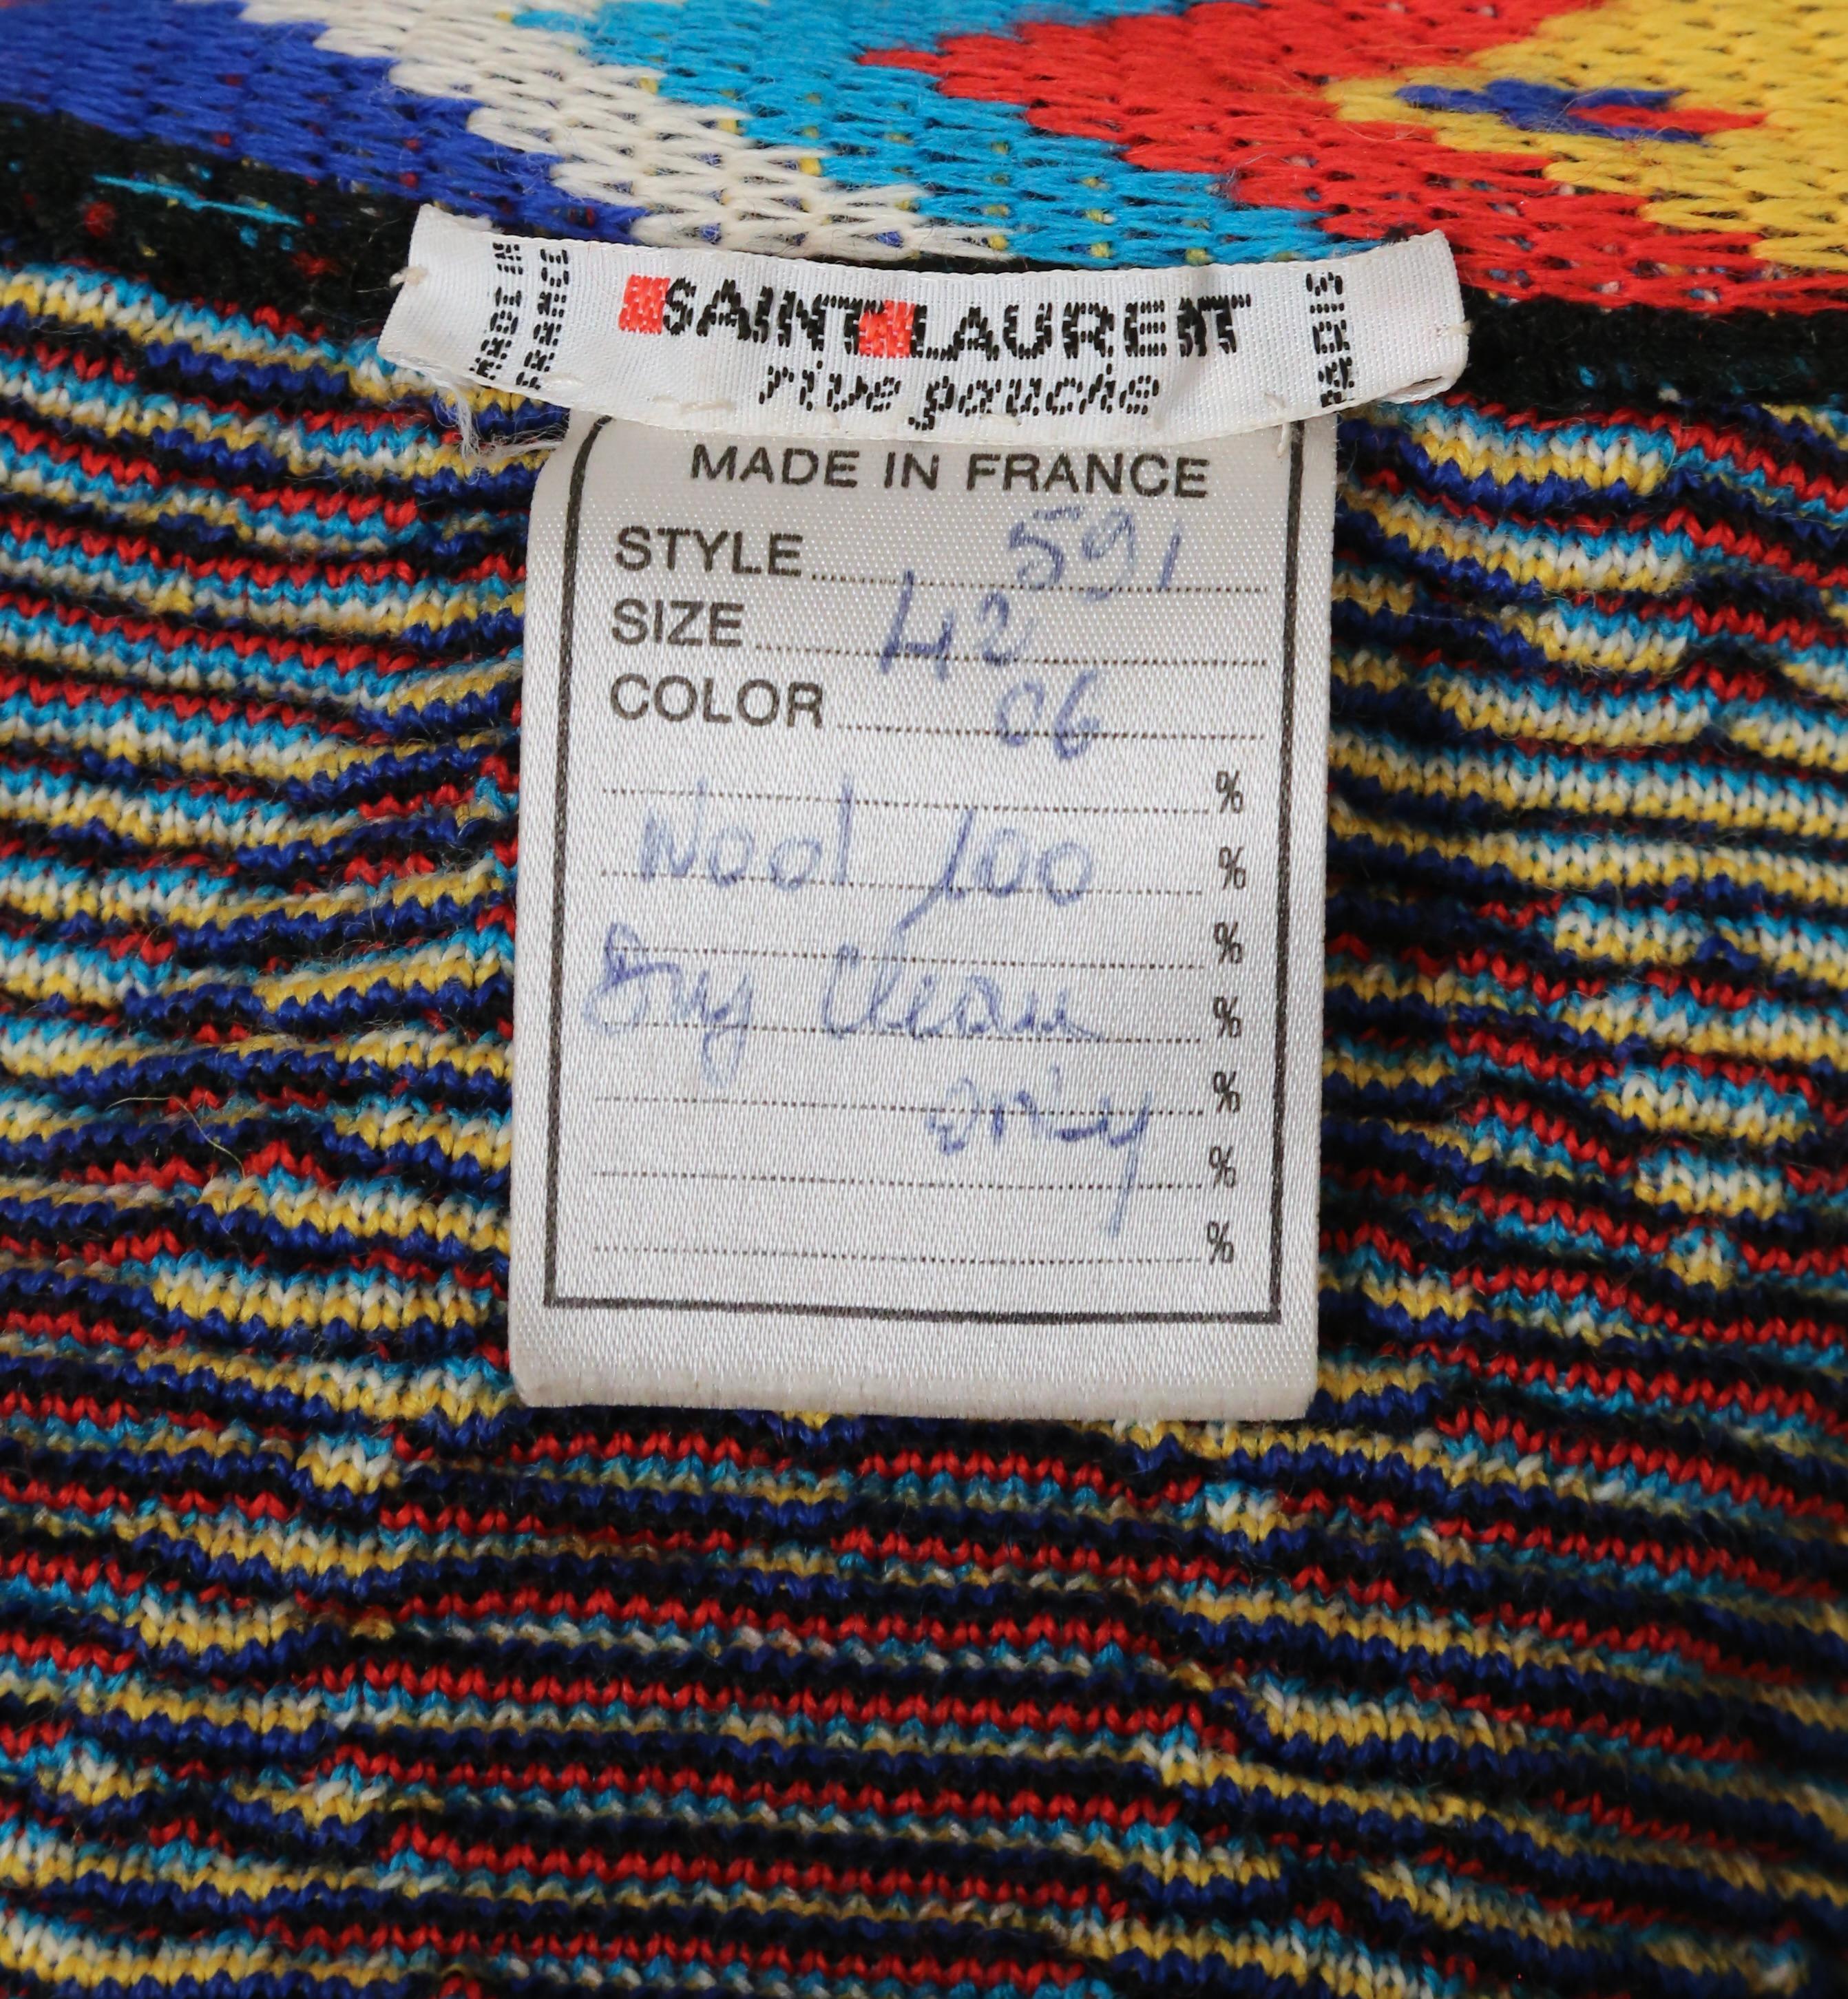 1979 YVES SAINT LAURENT bright Ikat sweater coat For Sale 3